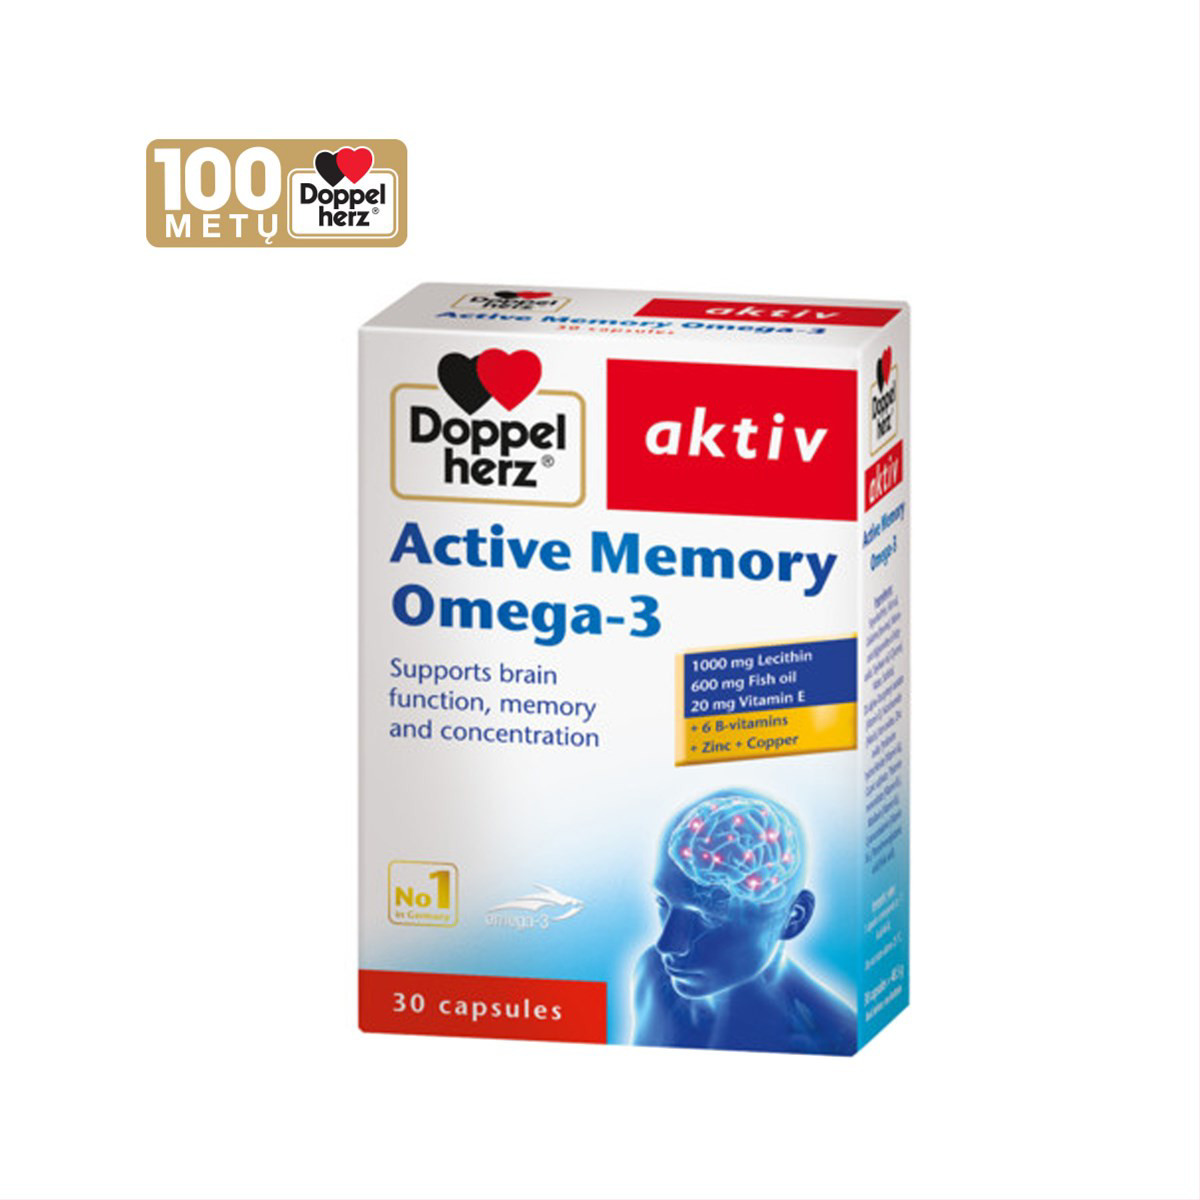 DOPPELHERZ AKTIV ACTIVE MEMORY OMEGA-3, 30 kapsulių